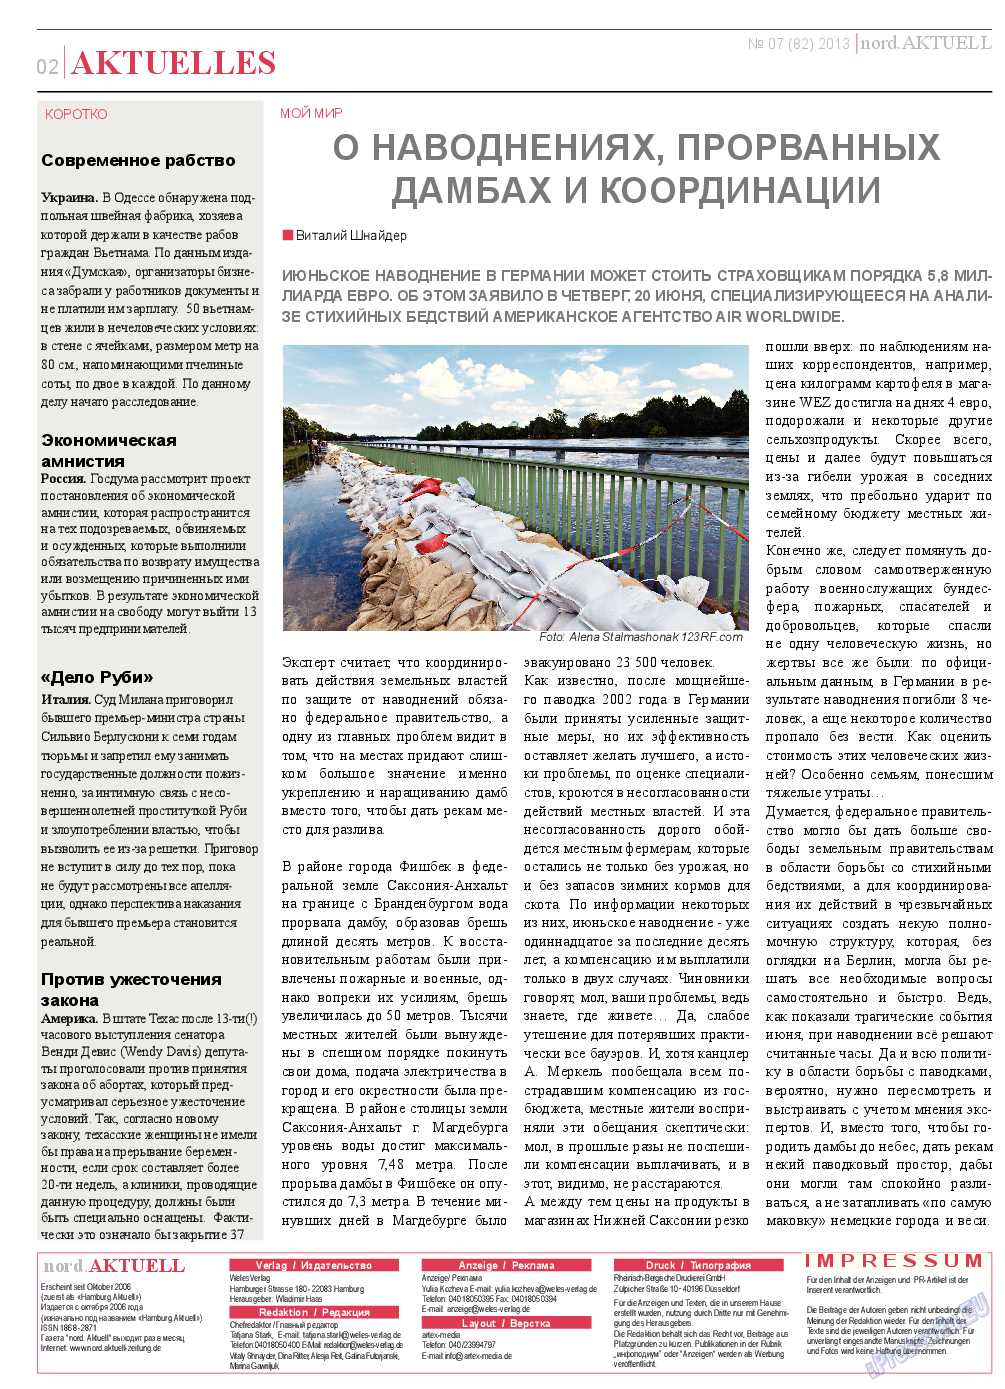 nord.Aktuell, газета. 2013 №7 стр.2